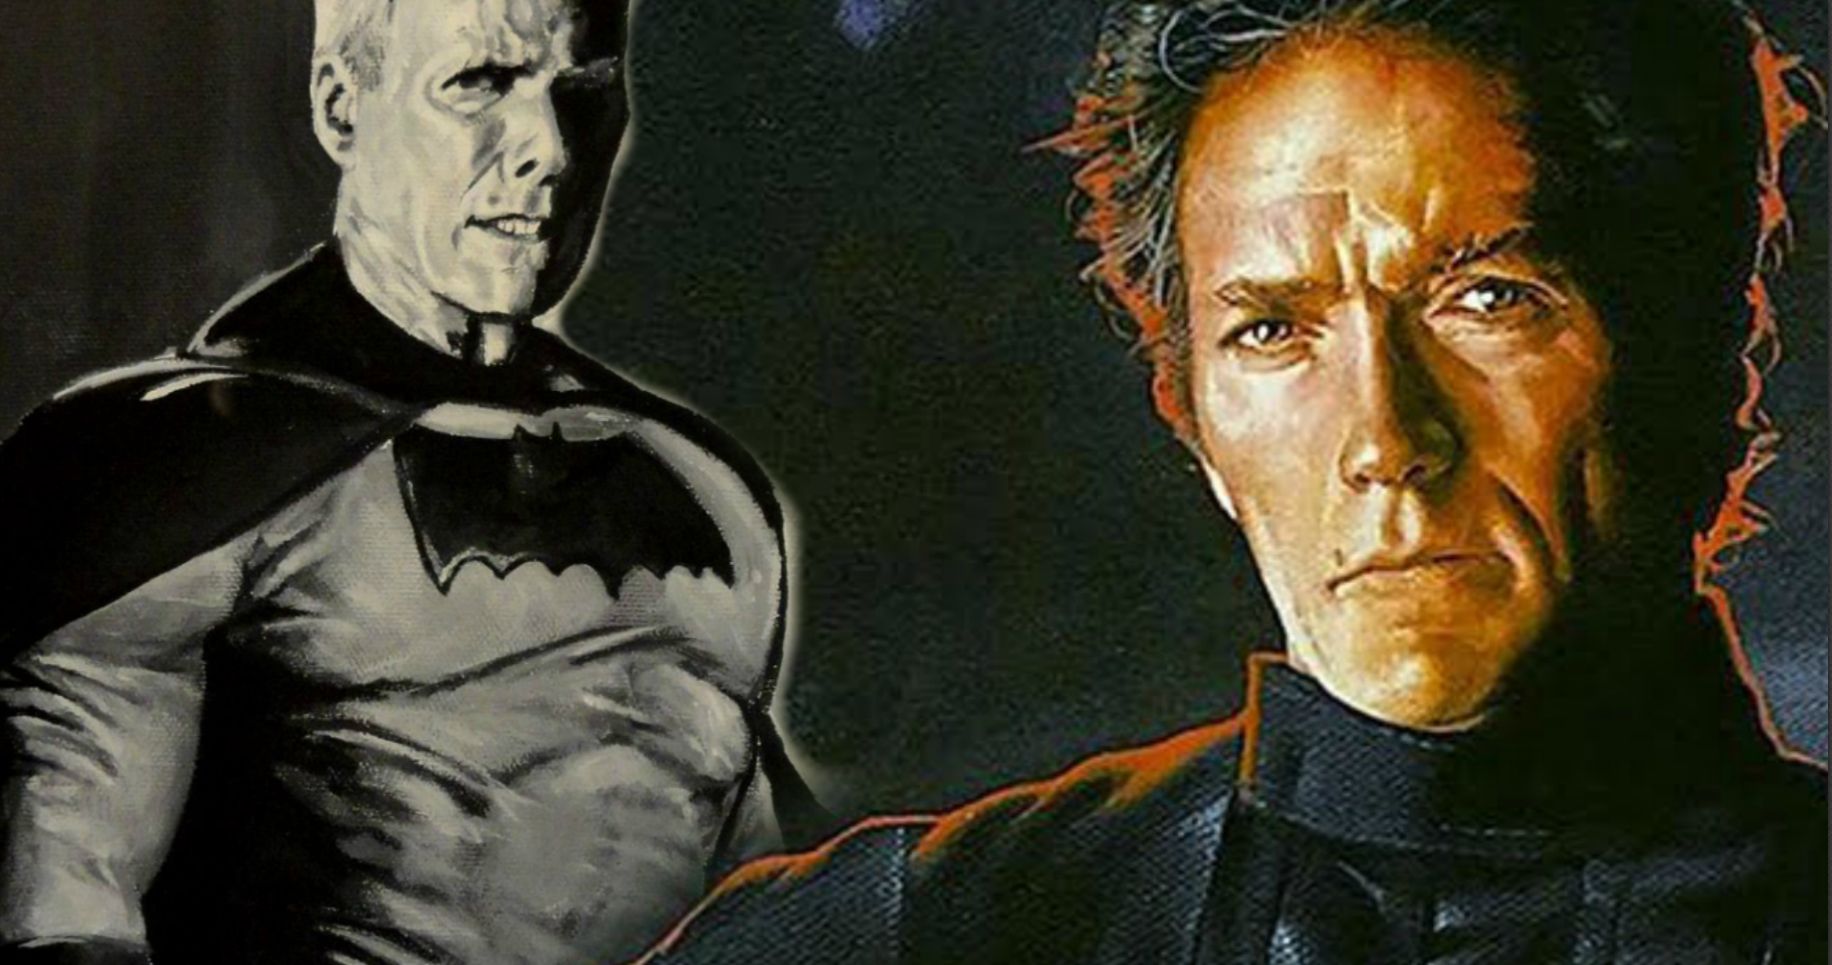 Scrapped Batman Beyond Movie Wanted Clint Eastwood as Bruce Wayne